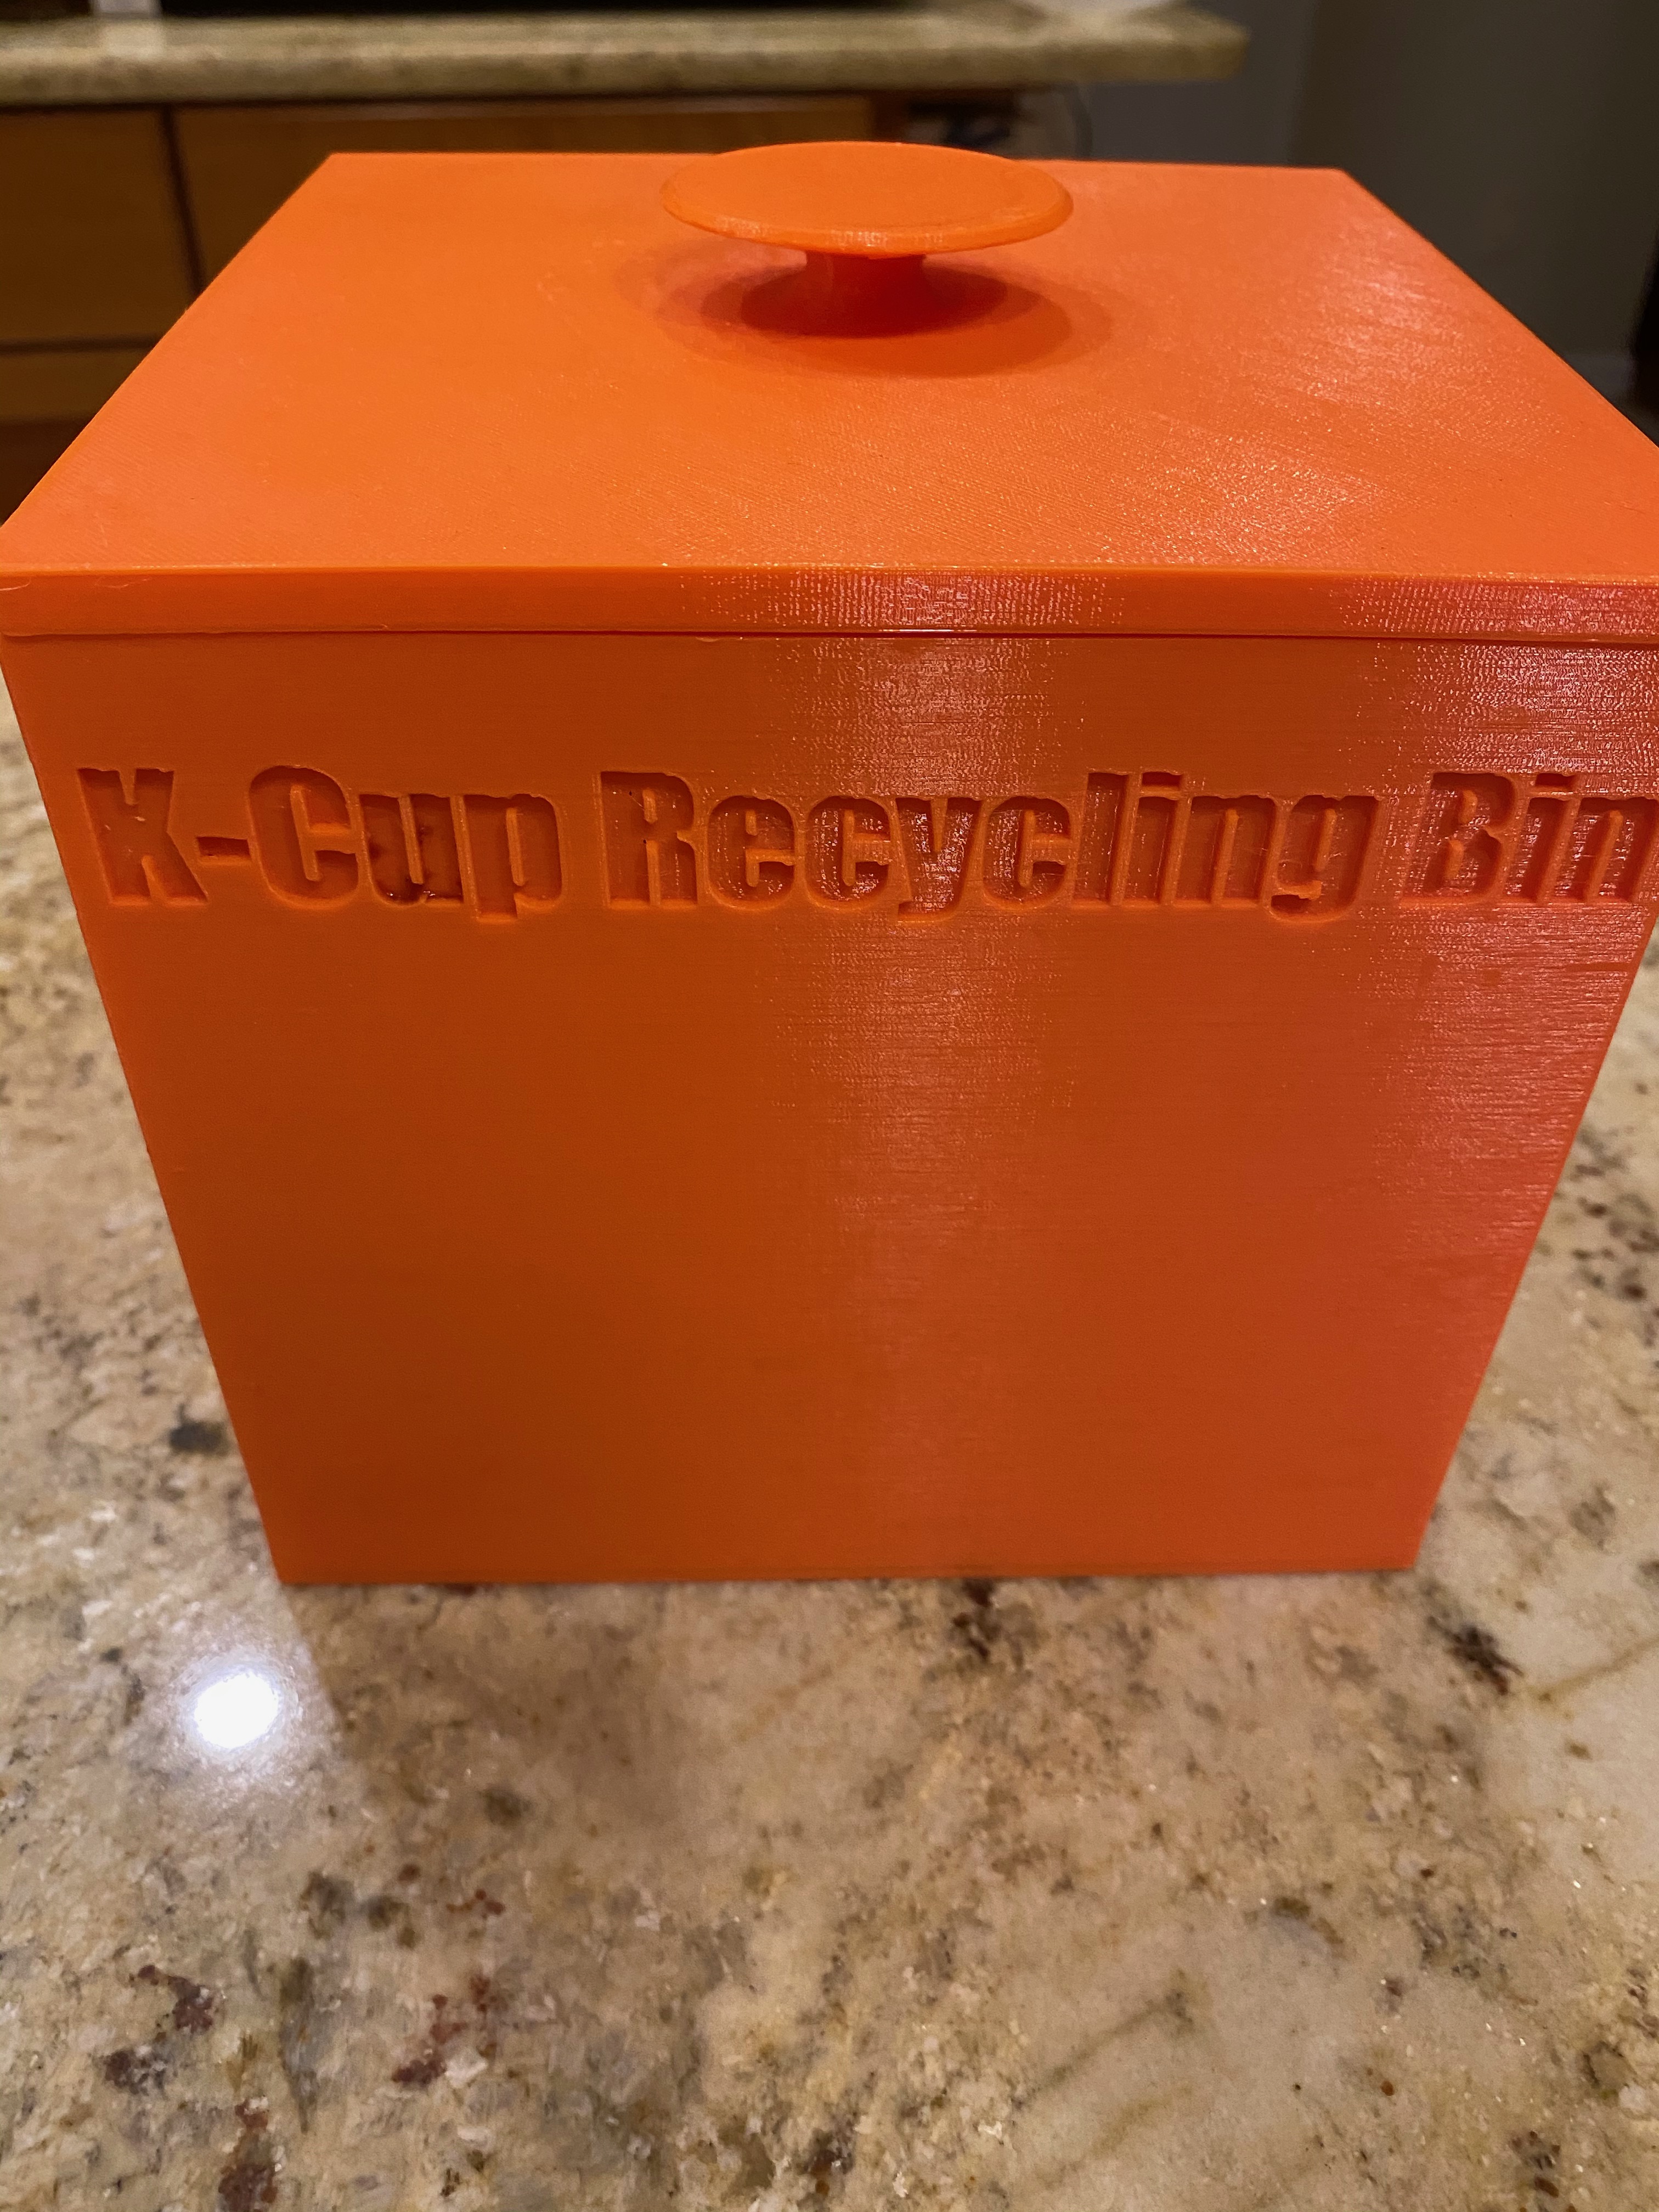 K-Cup Recycle Bin